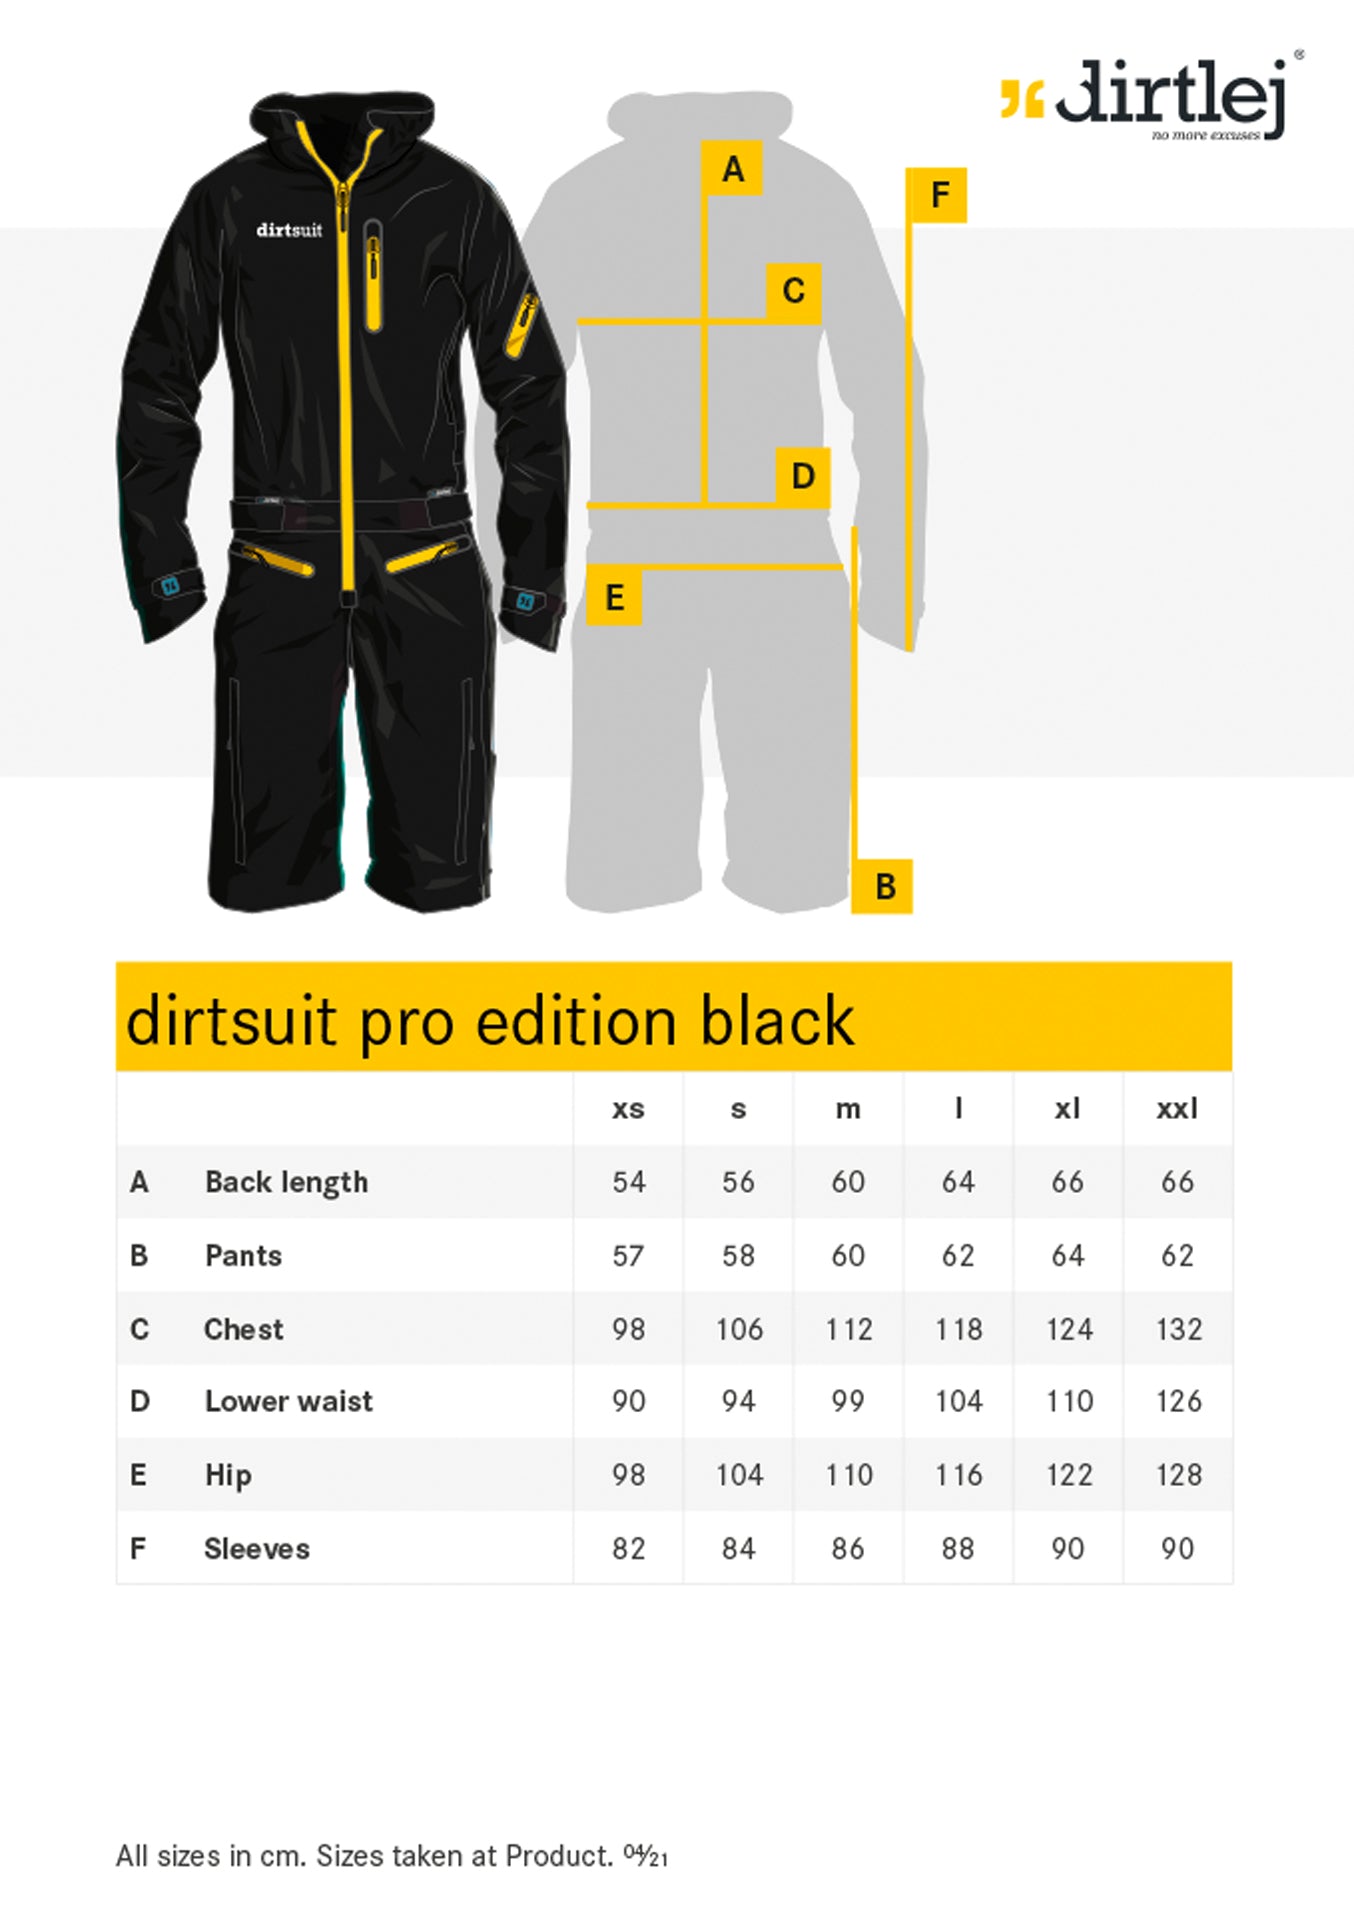 DIRTLEJ  Dirt suit pro edition